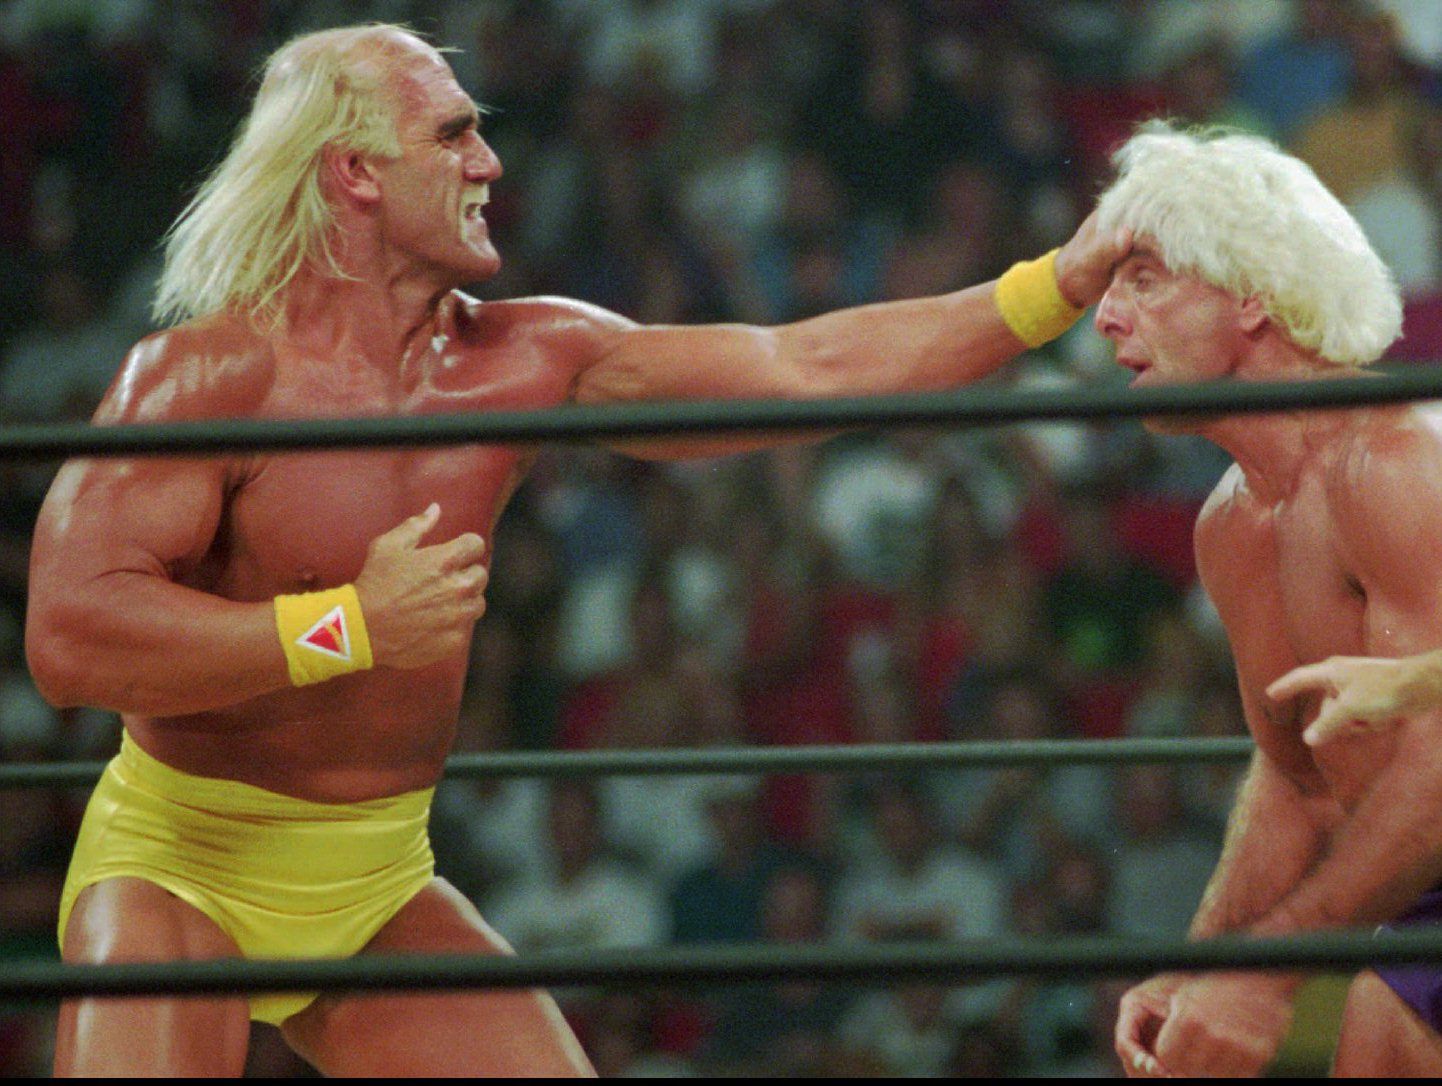 Arn Anderson shares memories of the iconic Ric Flair vs. Hulk Hogan match at WCW Halloween Havoc